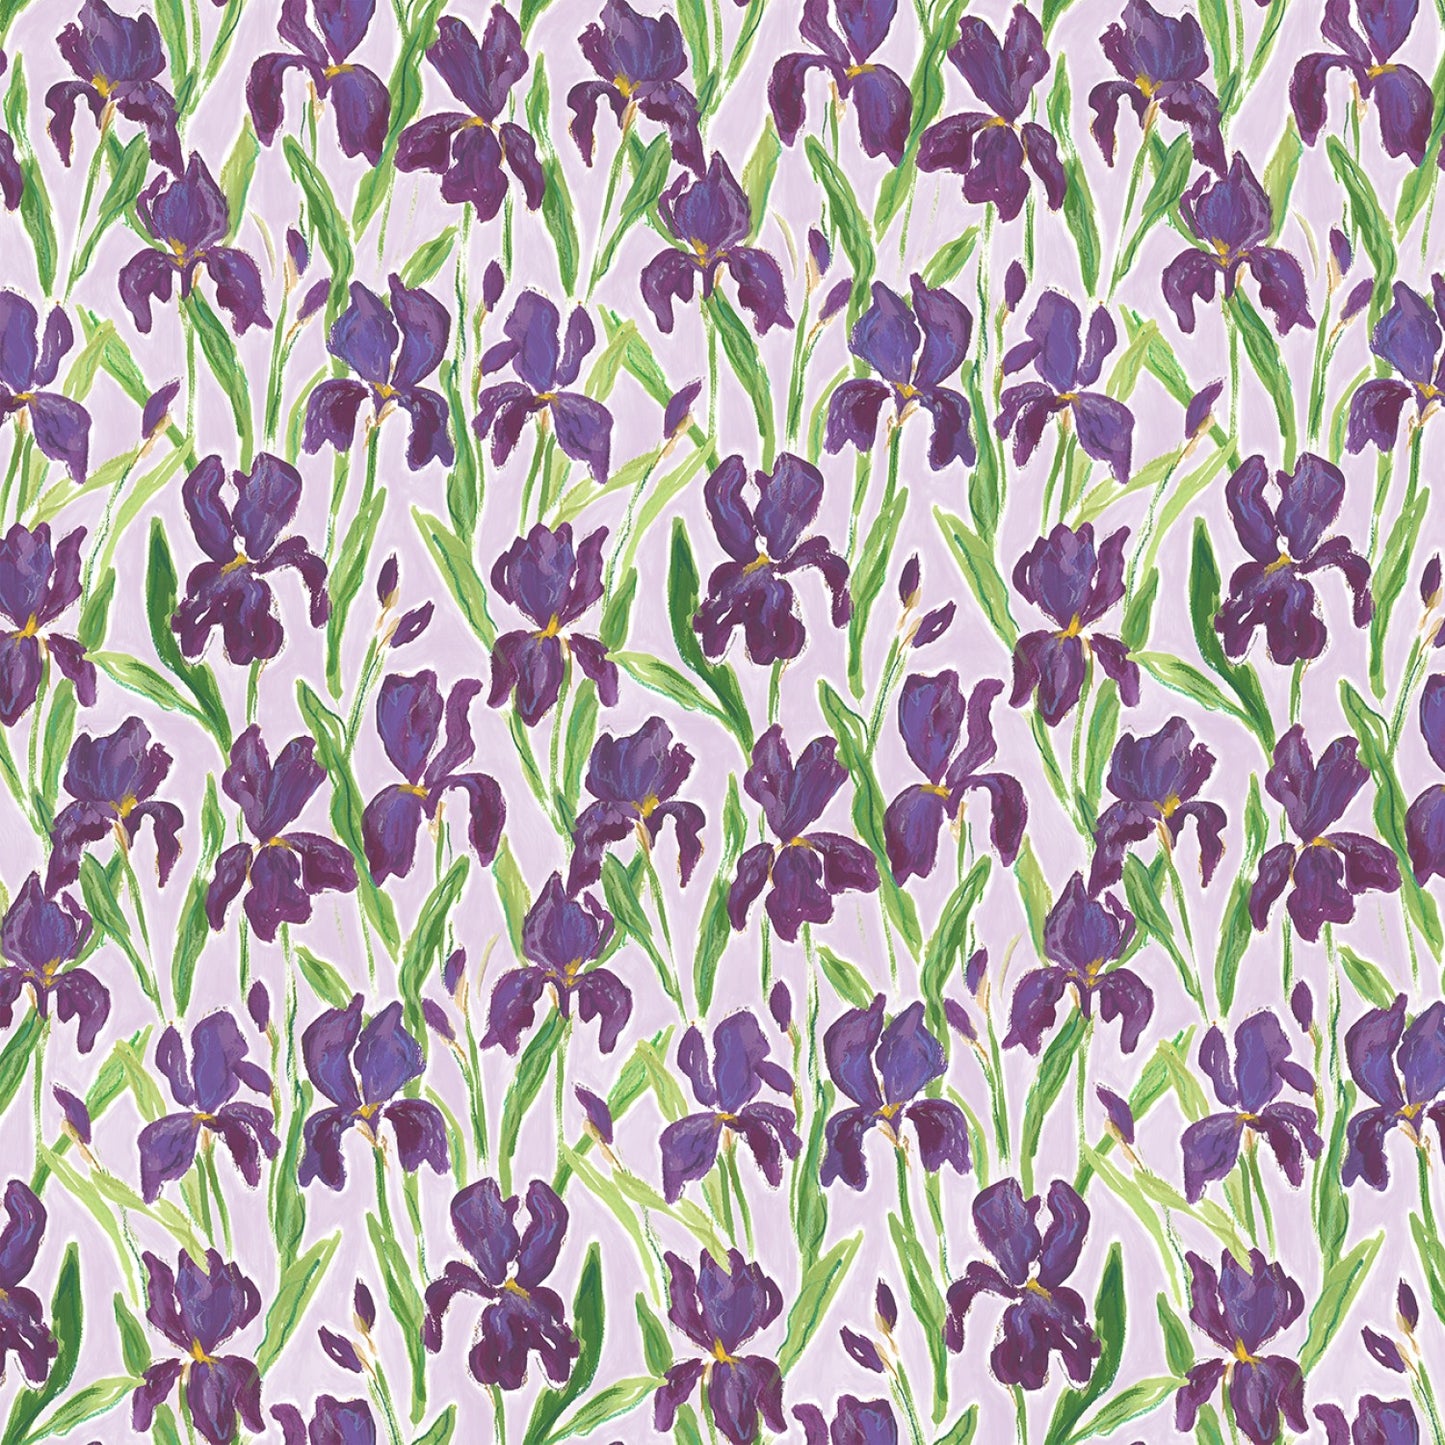 Irises - Digital Print - by Caitlin Wallace Rowland- Purple Multi